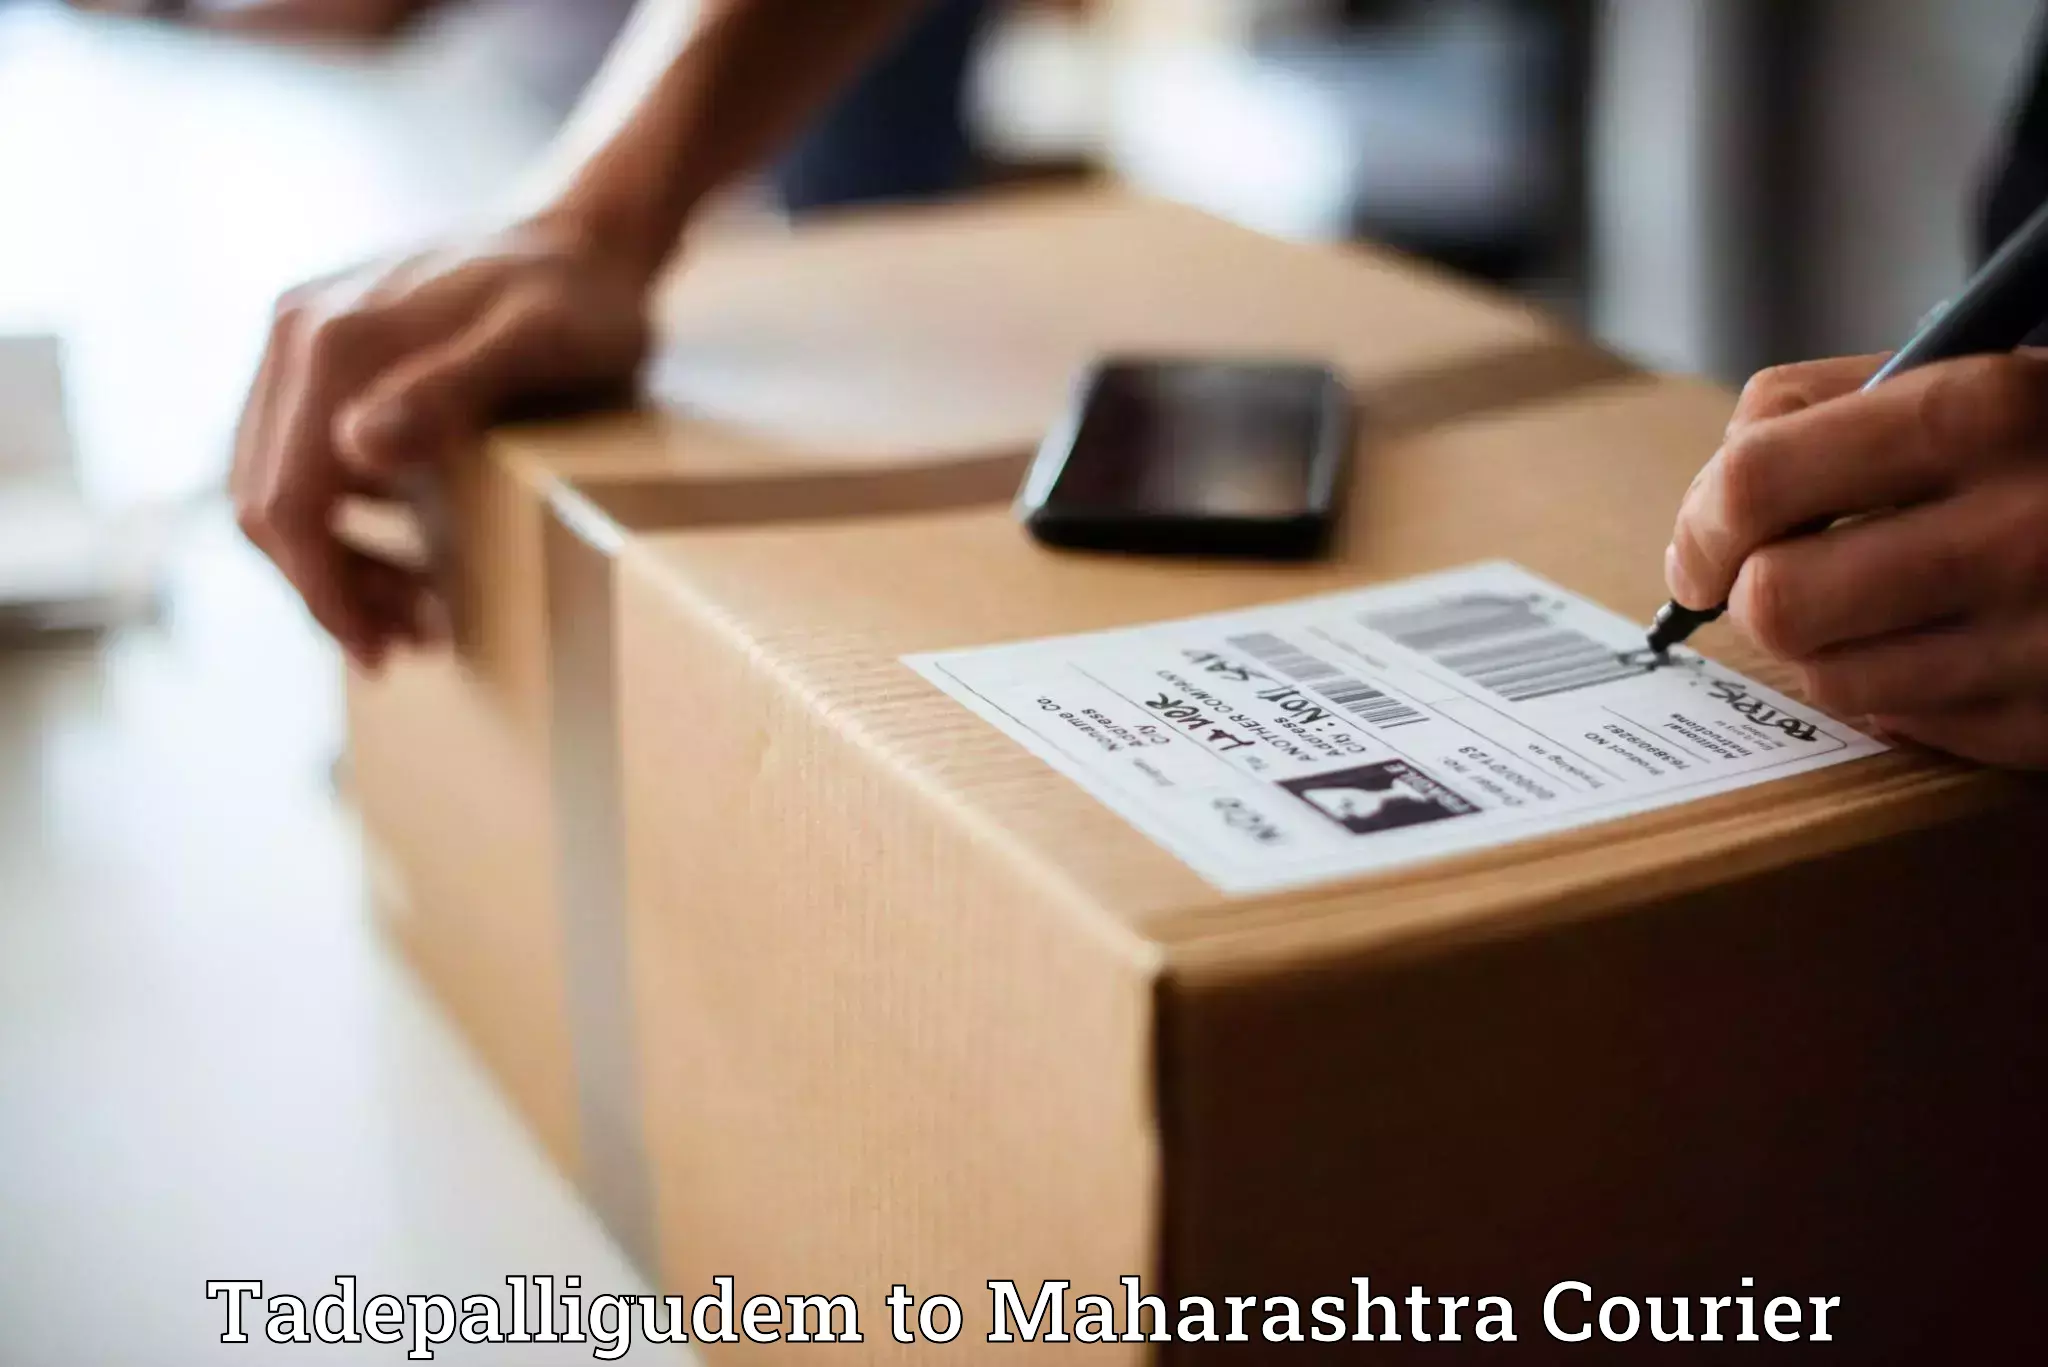 High-speed parcel service Tadepalligudem to Maharashtra